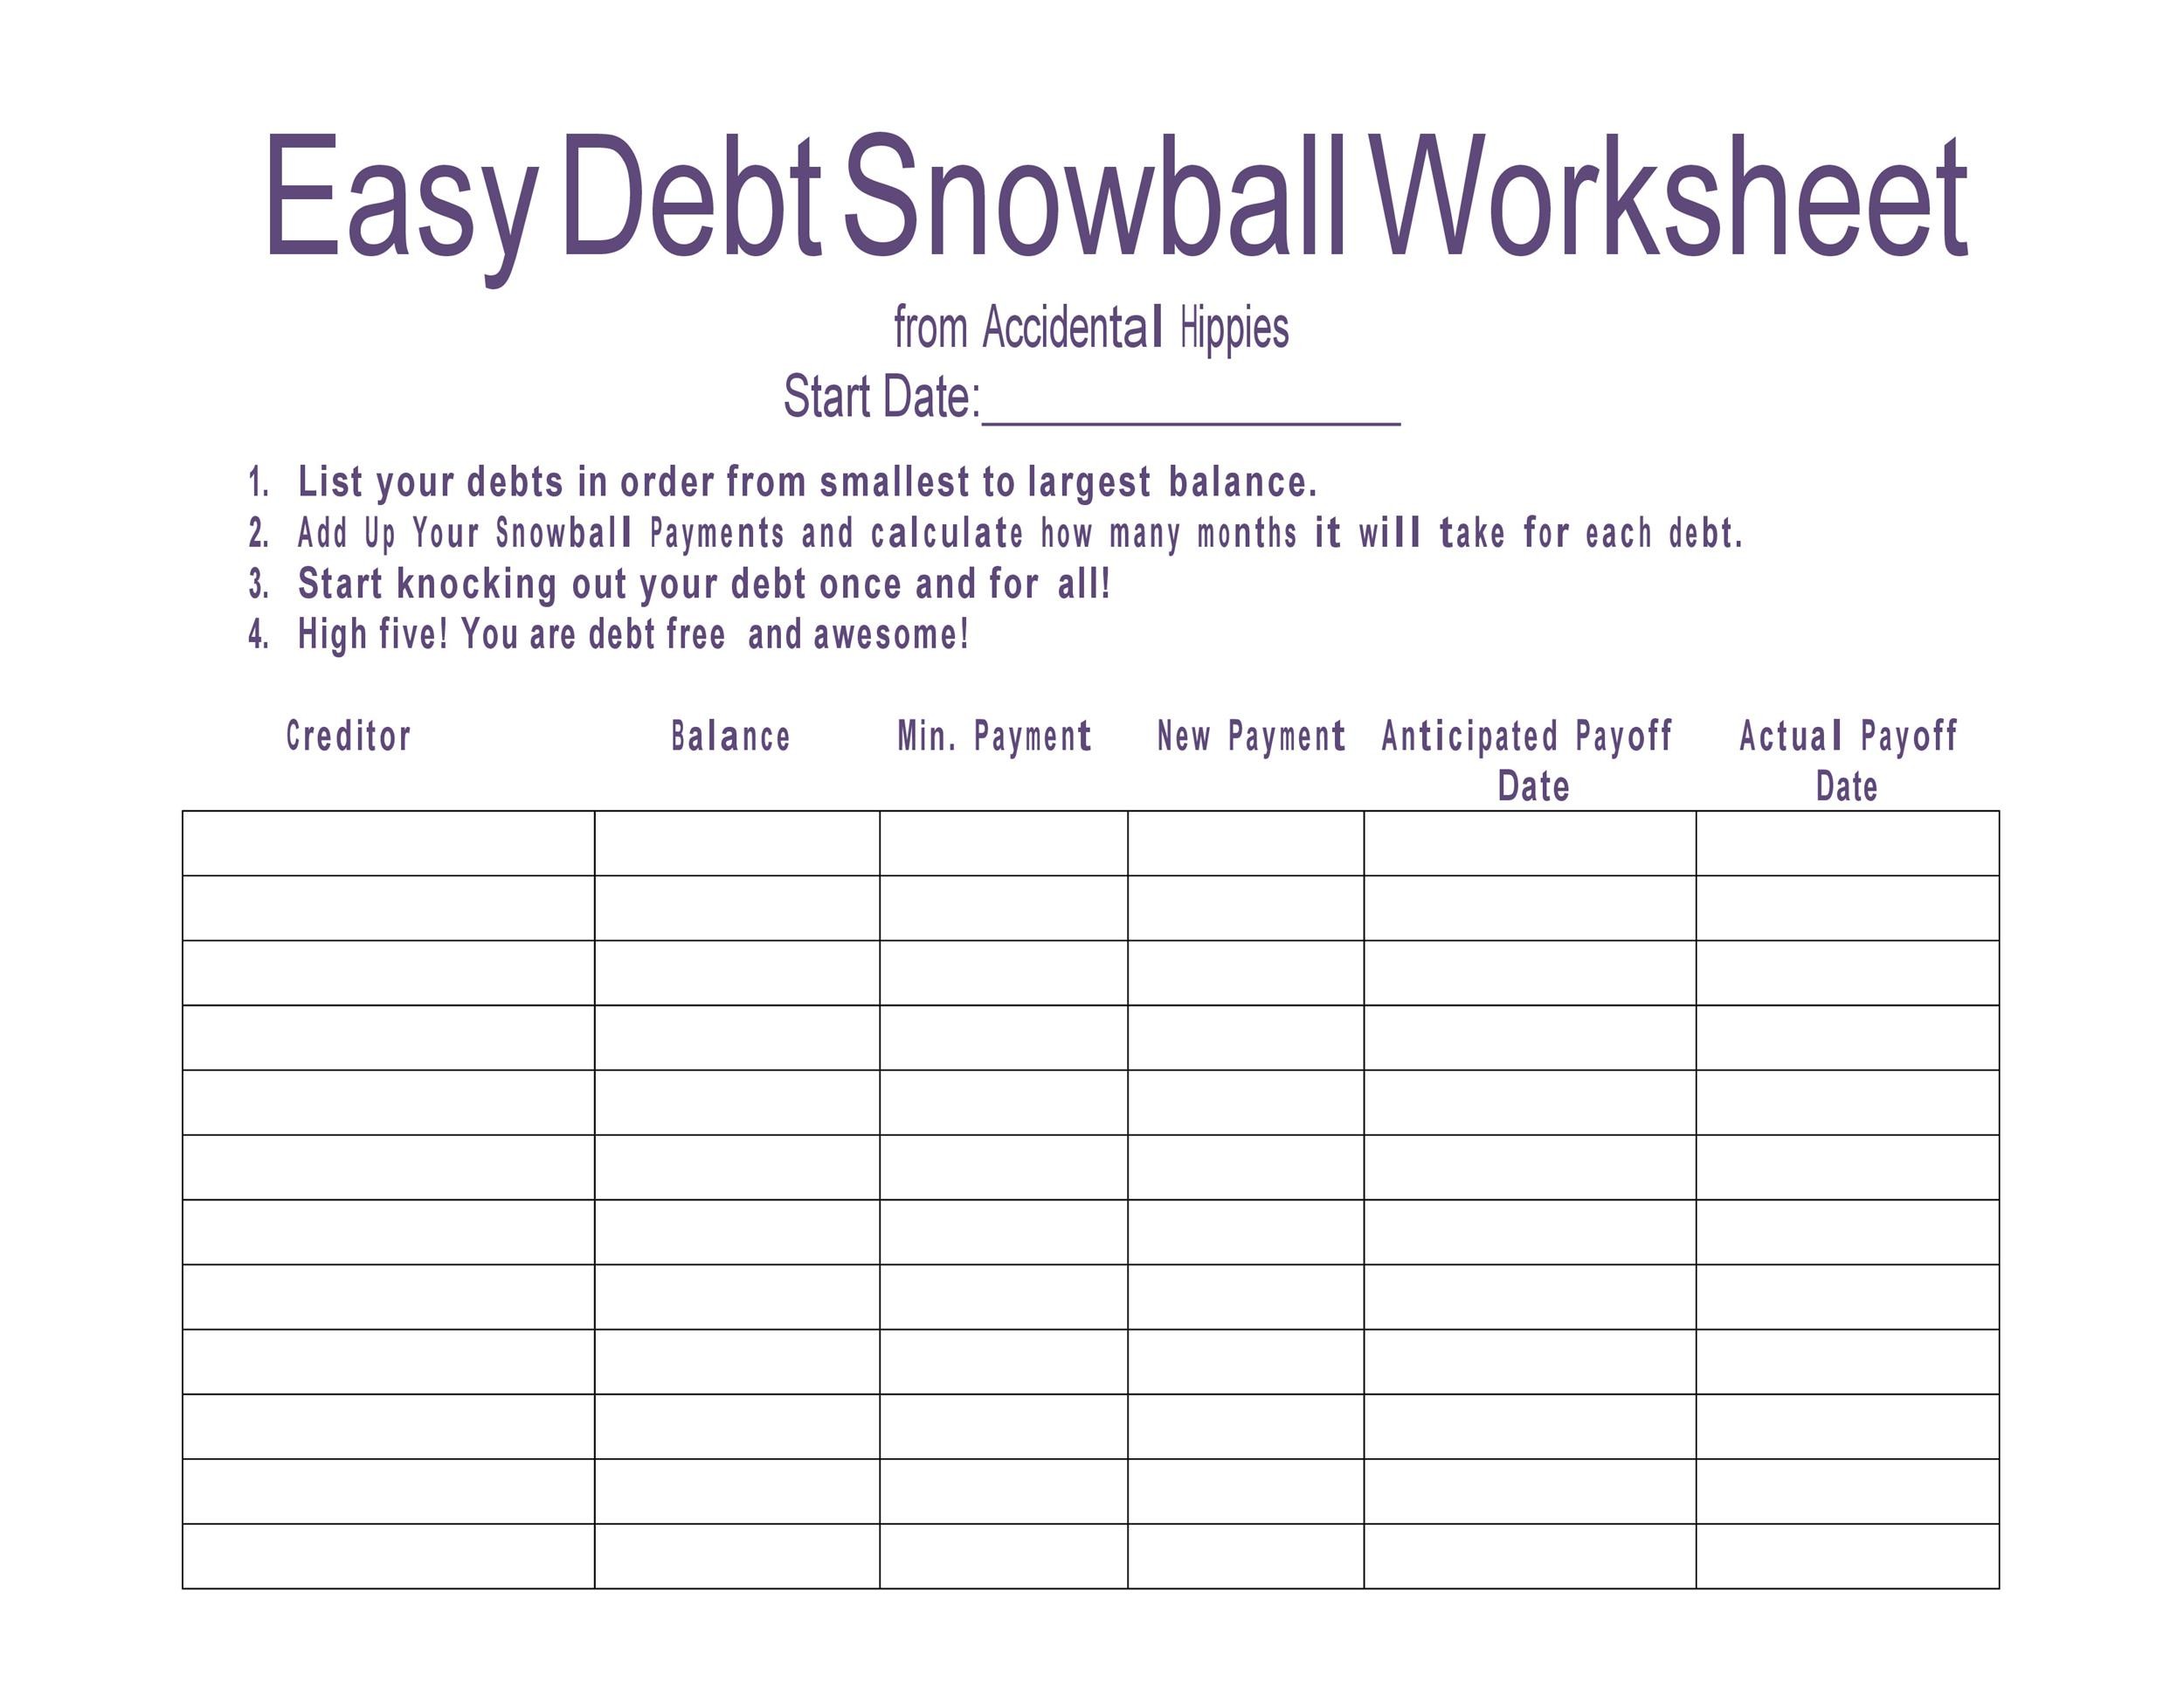 38 Debt Snowball Spreadsheets, Forms & Calculators